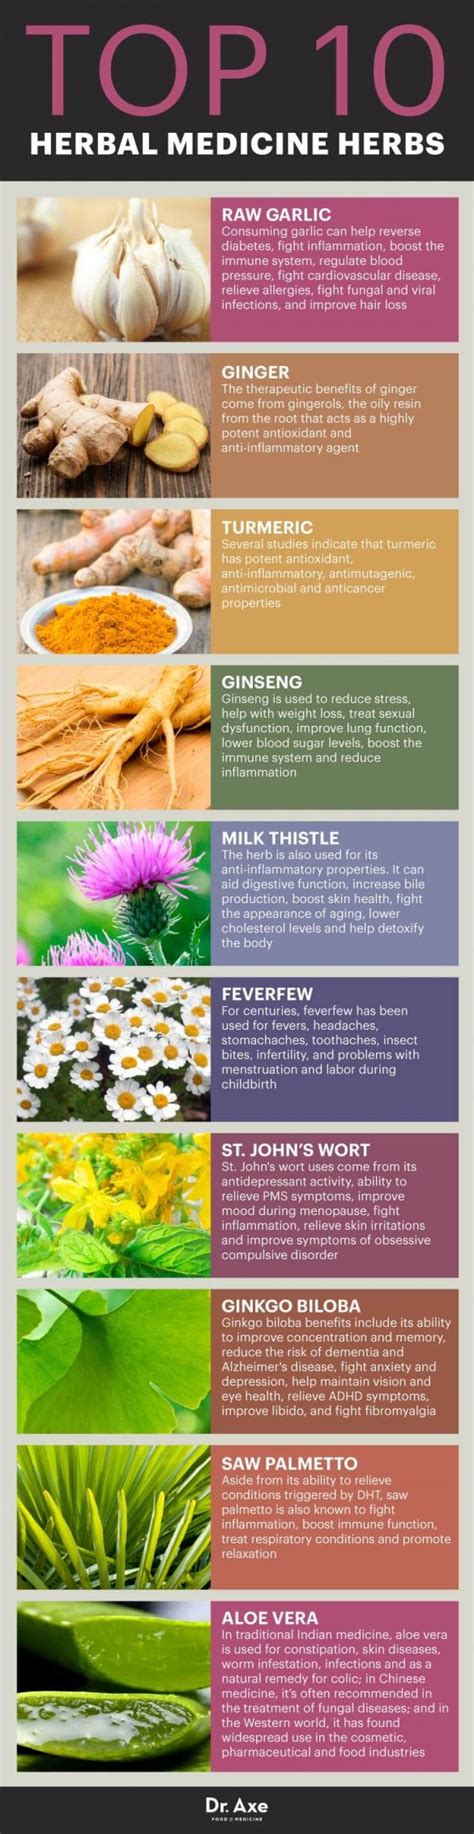 medicinal herbs guide